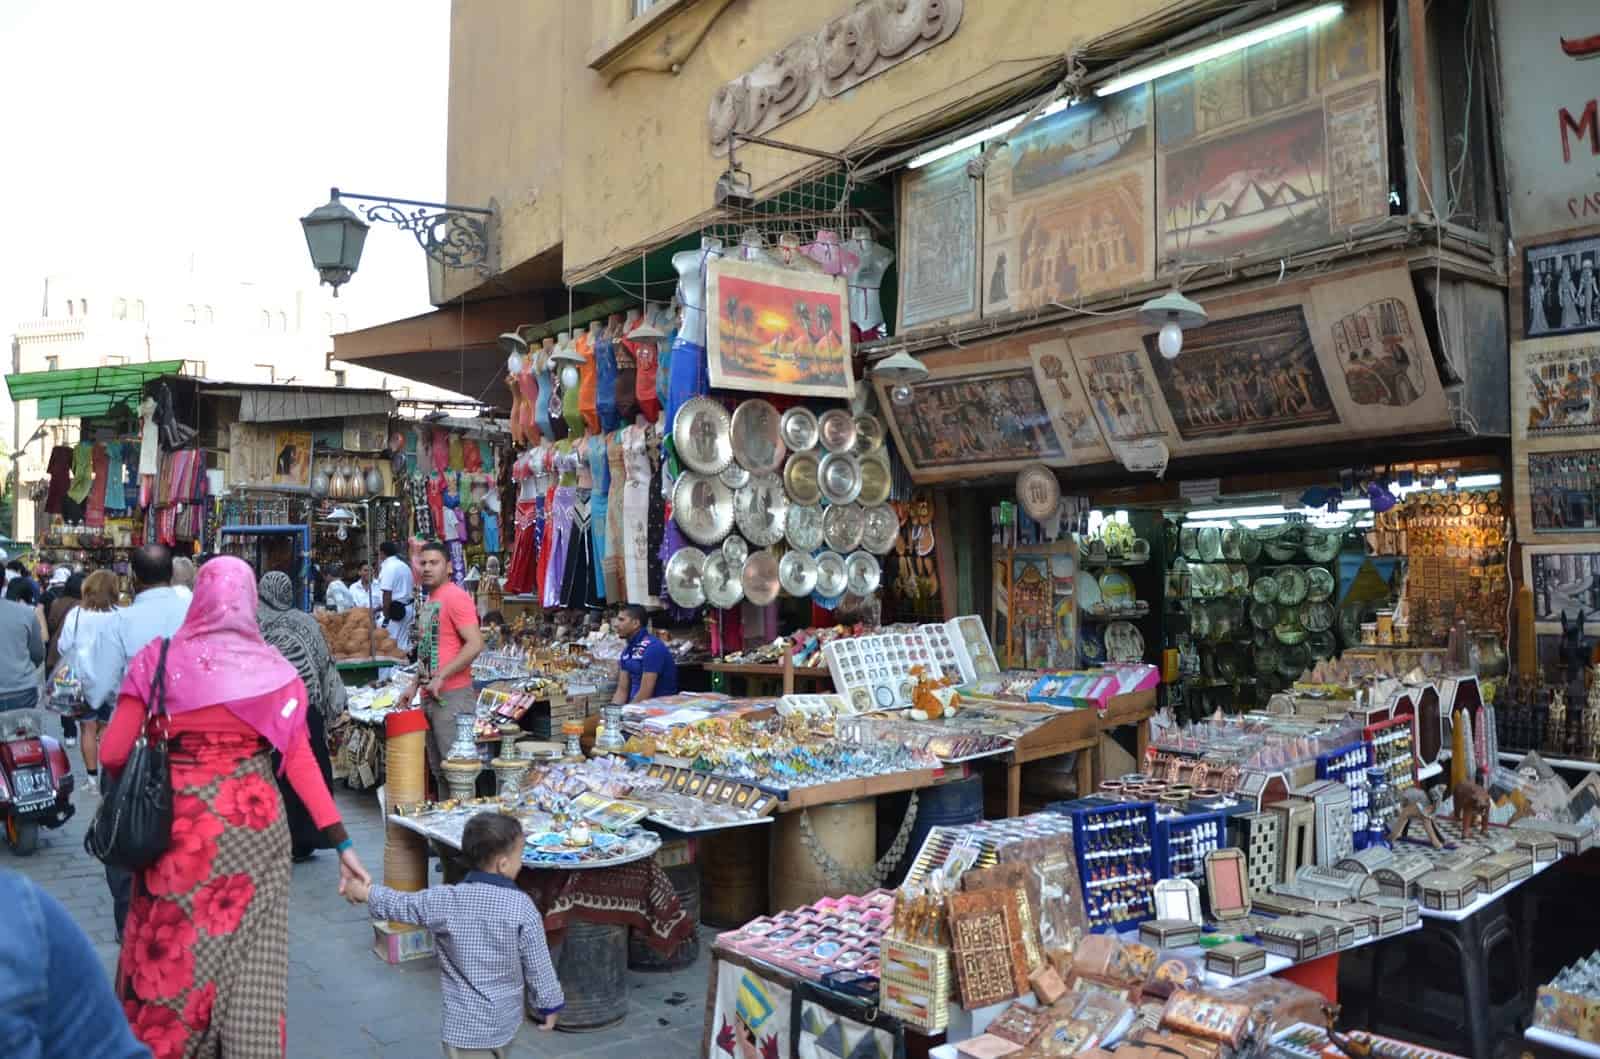 Shopping outside the bazaar in Cairo, Egypt